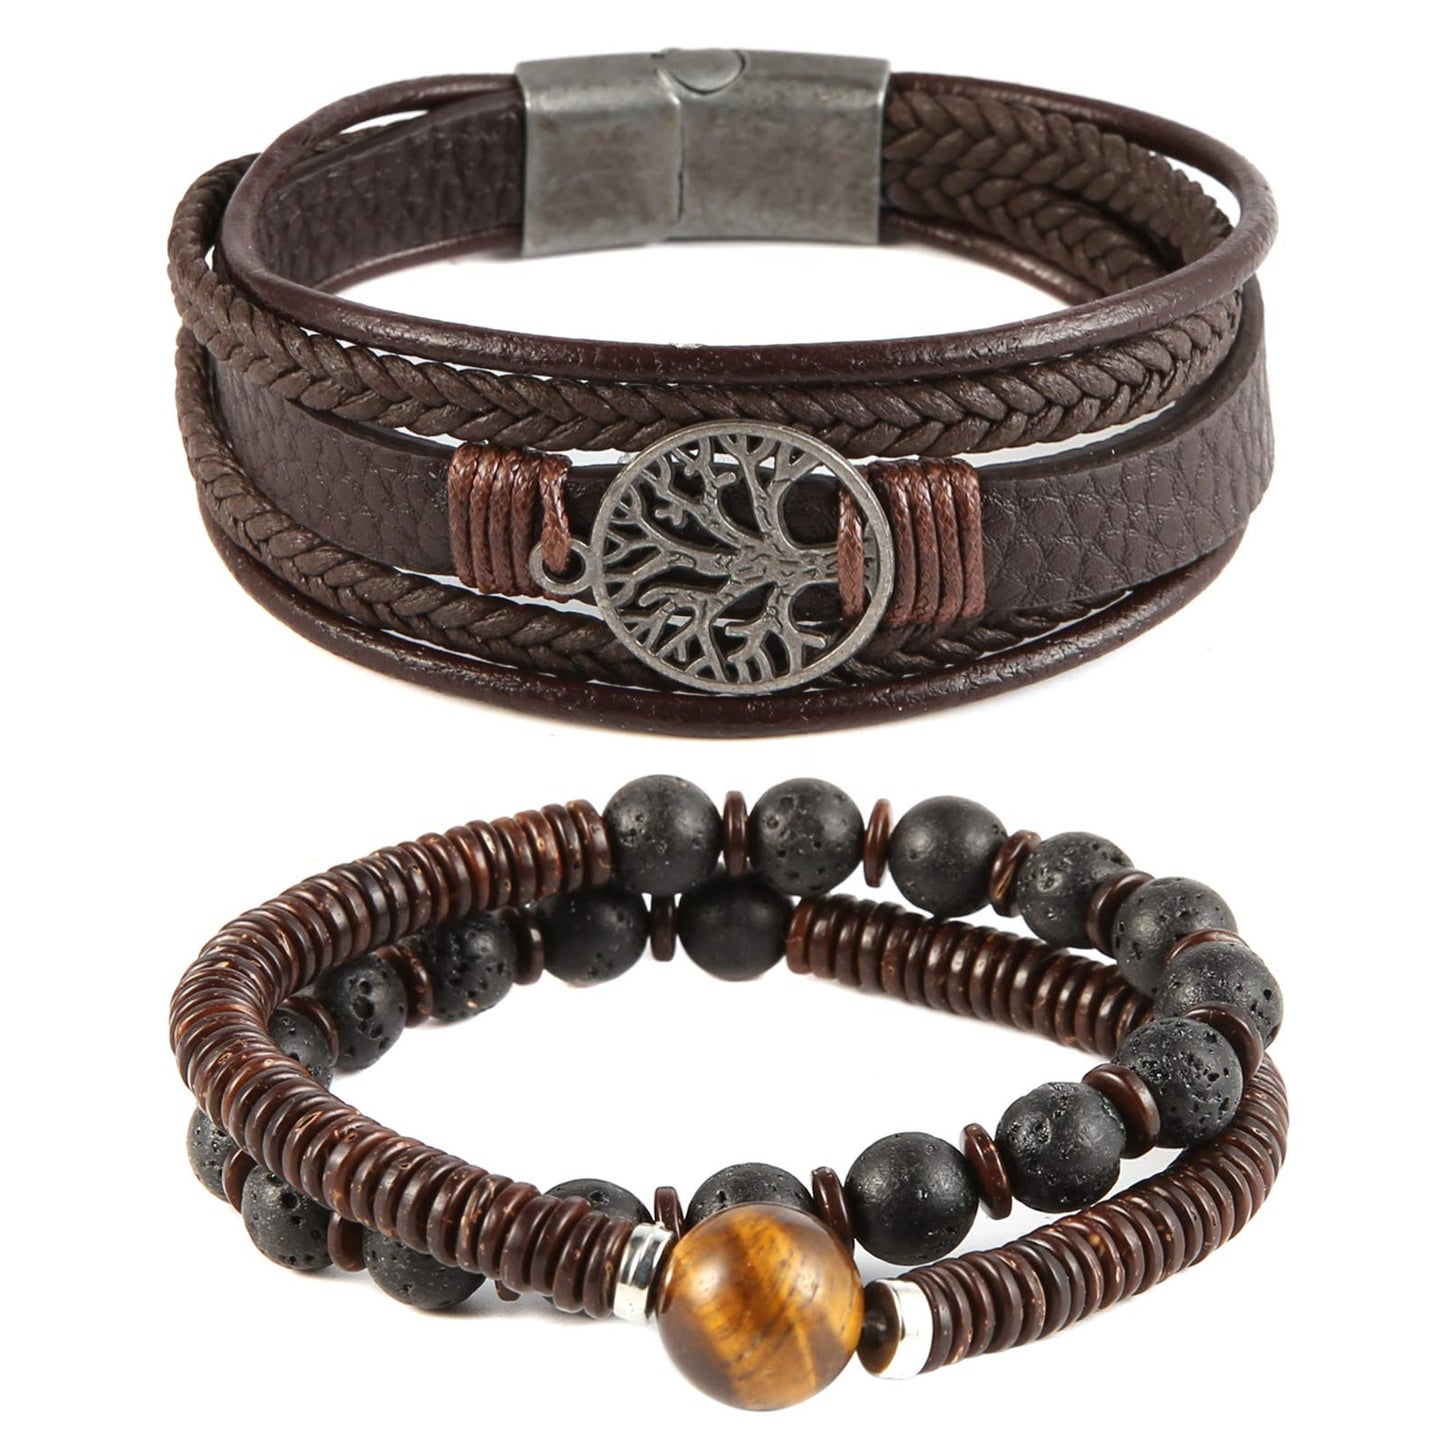 HZMAN Genuine Leather Tree of life Bracelets Men Women, Tiger Eye Natural Stone Lava Rock Beads Ethnic Tribal Elastic Bracelets Wristbands Classic Set